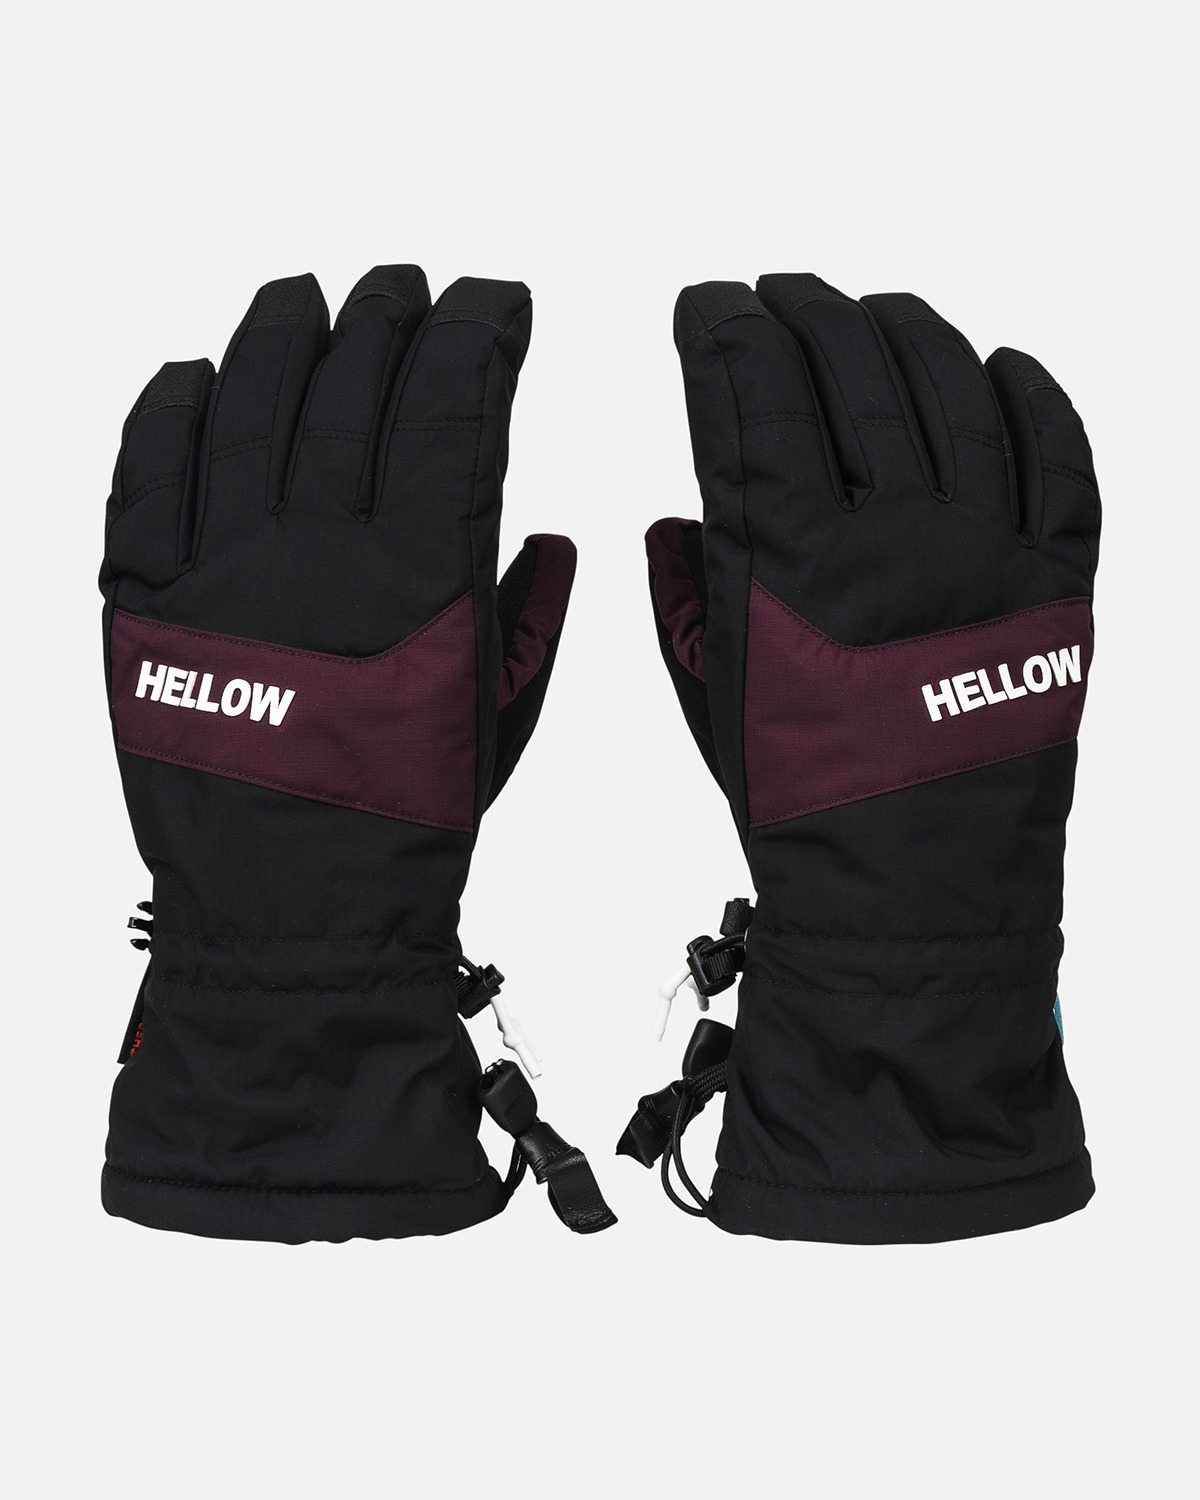 Hellow orda glove 2223 - black